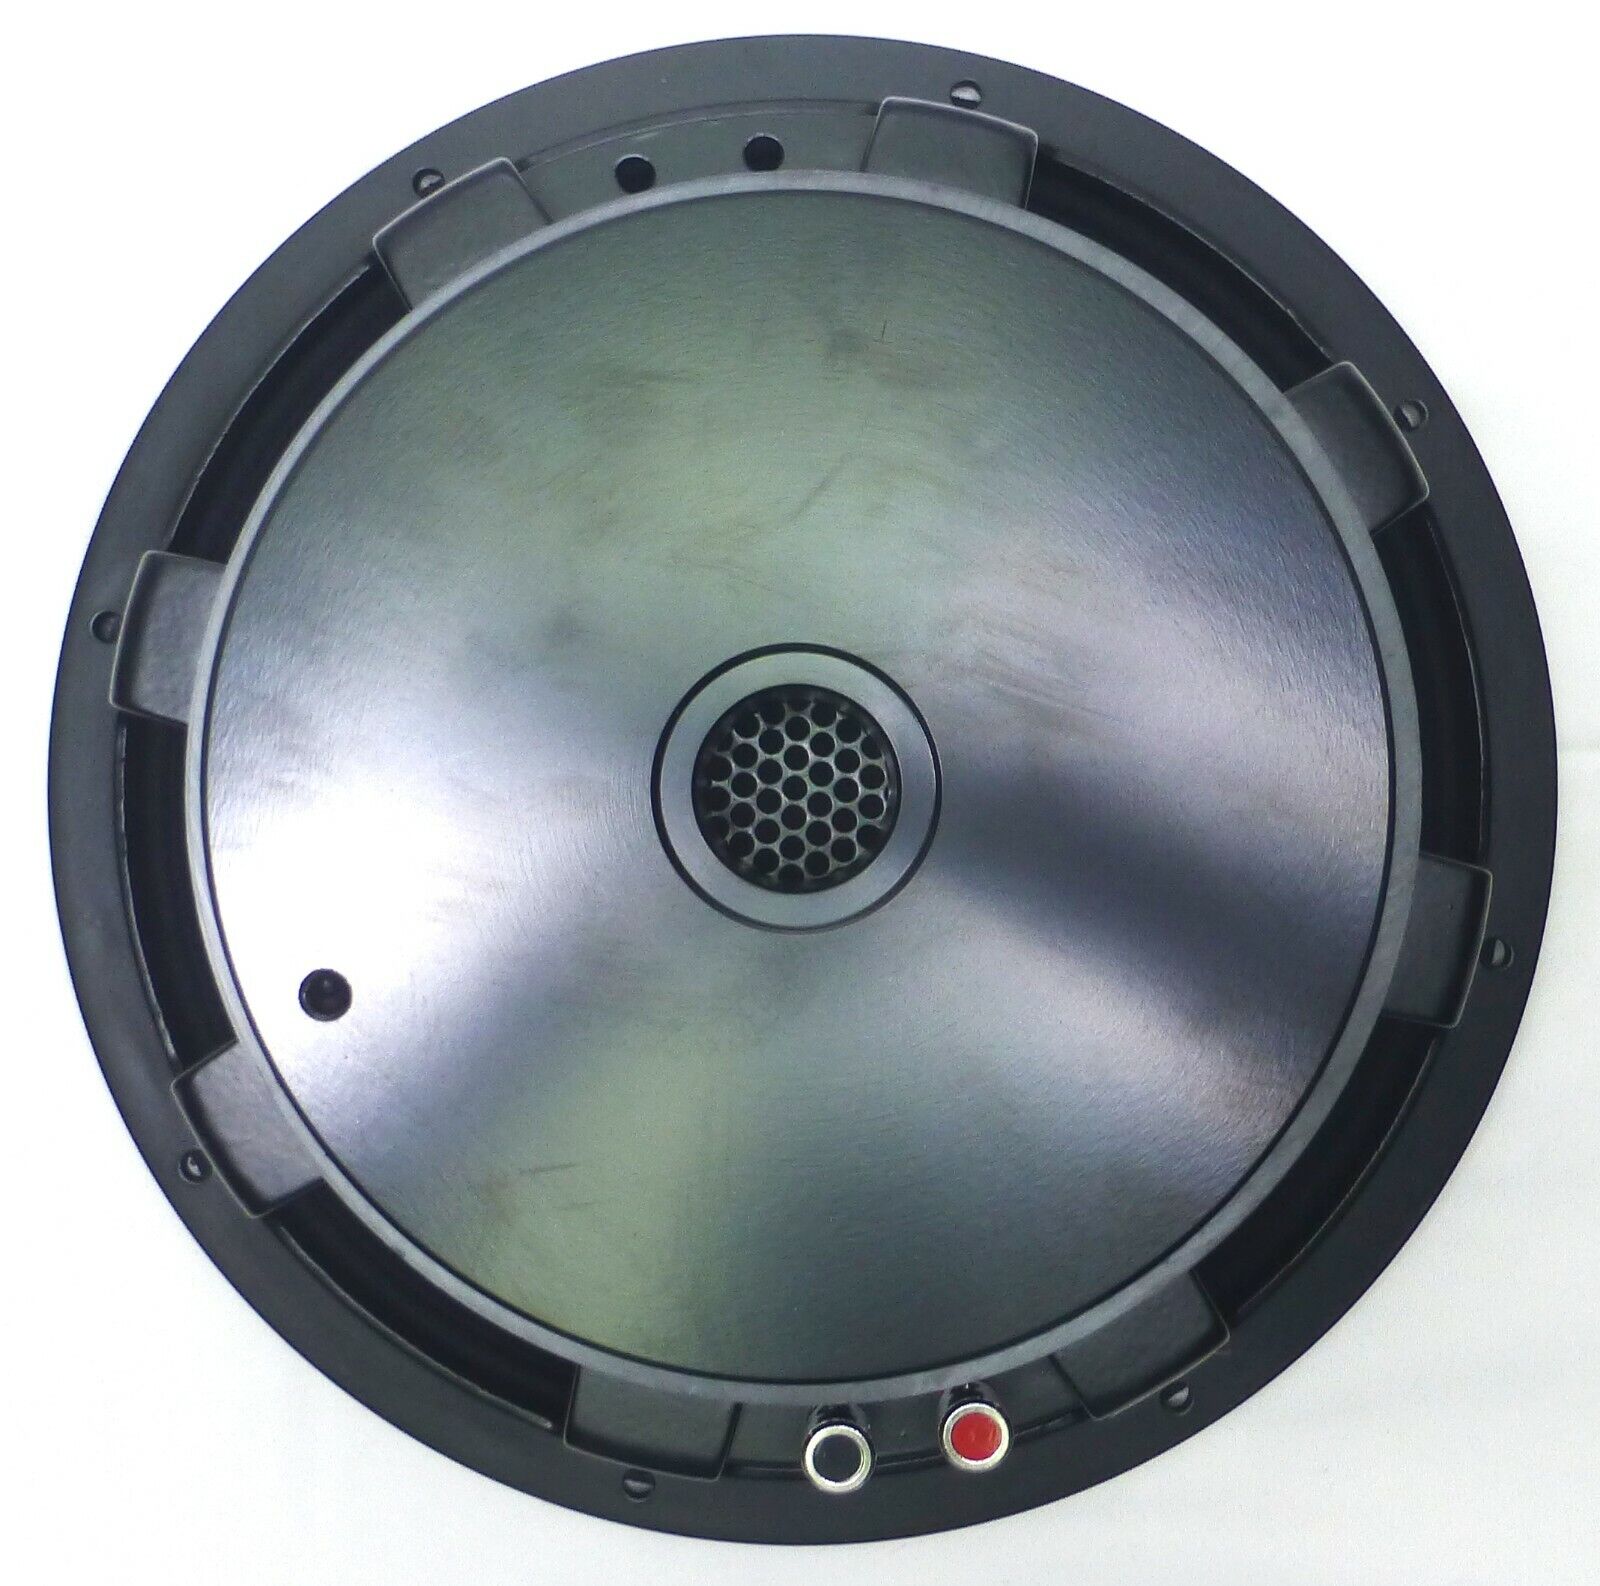 LASE1201 Replacement Speaker for 12" Electro Voice EVS-12SB, EVM-12L, & More